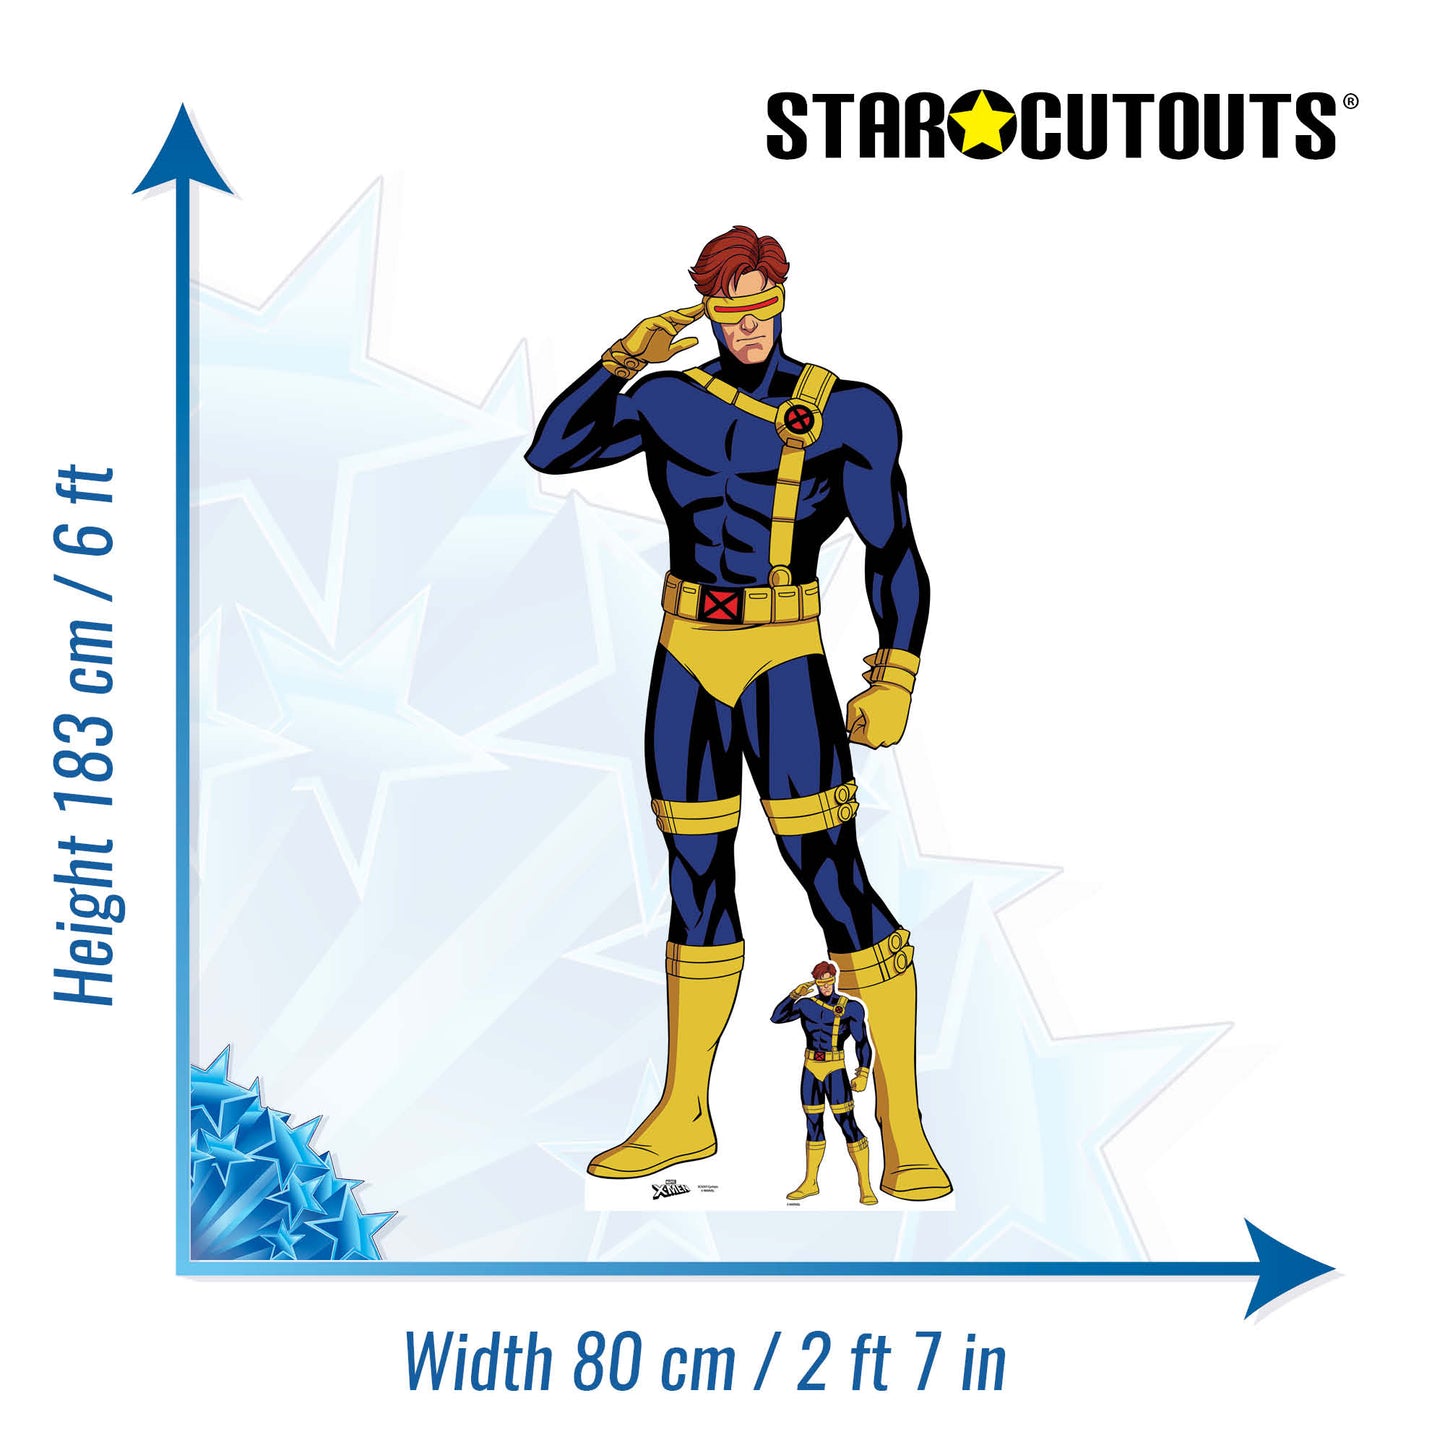 SC4297 Cyclops X-Men Cardboard Cut Out Height 183cm